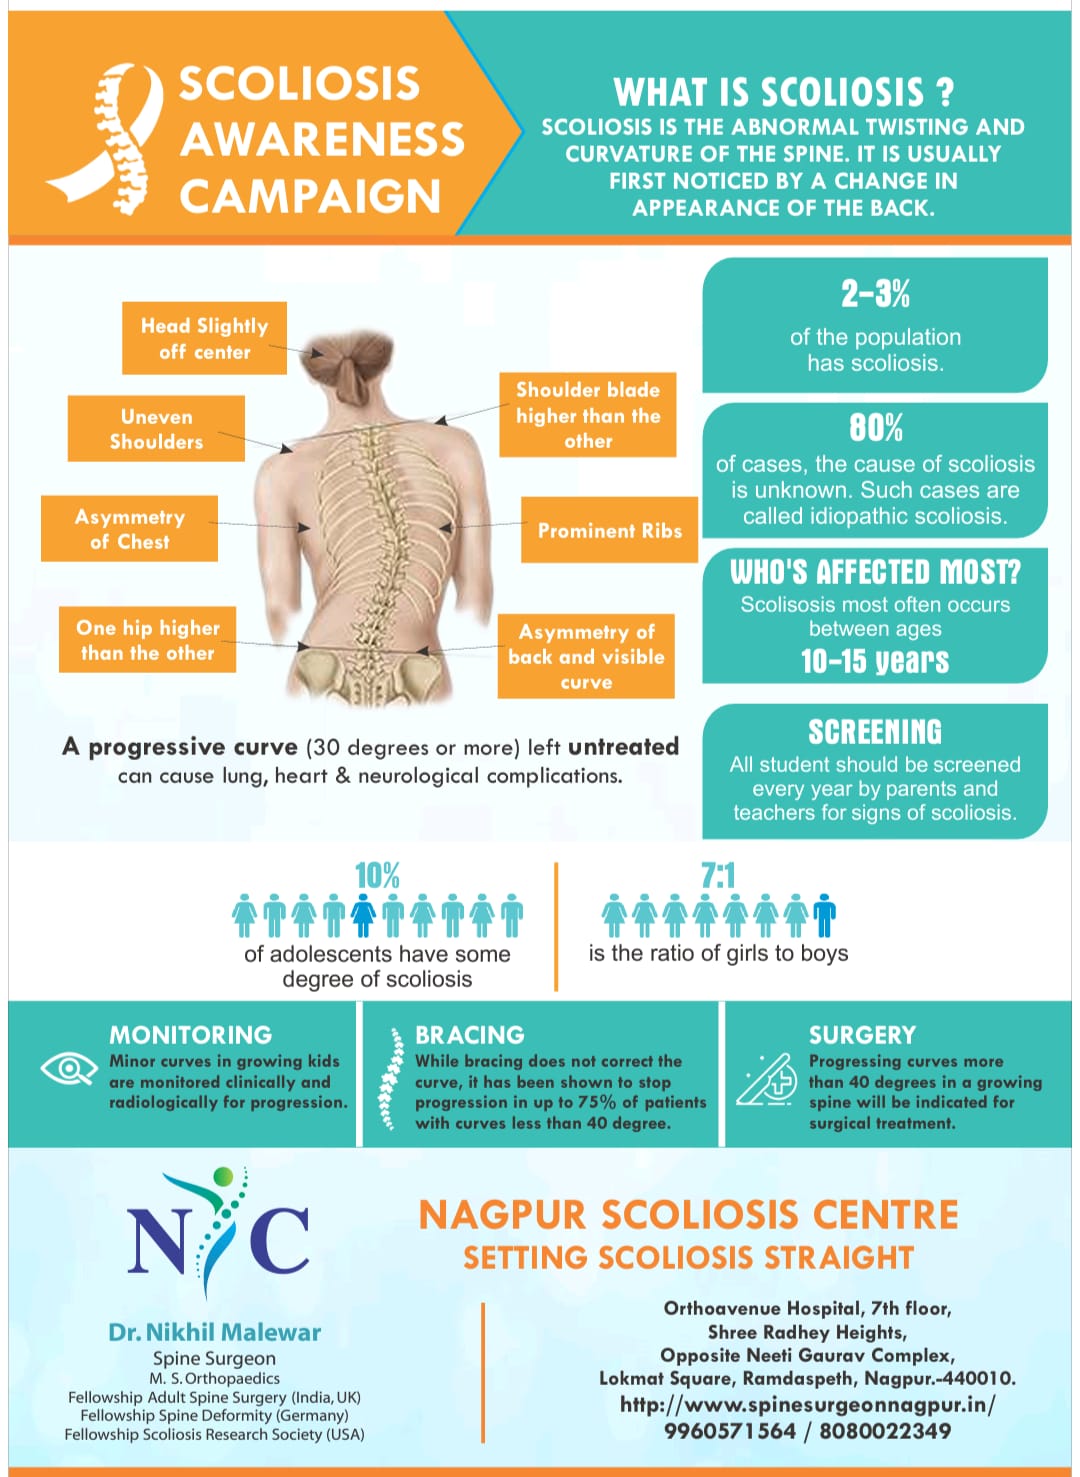 Scoliosis Treatment In India - Dr. Nikhil Malewar